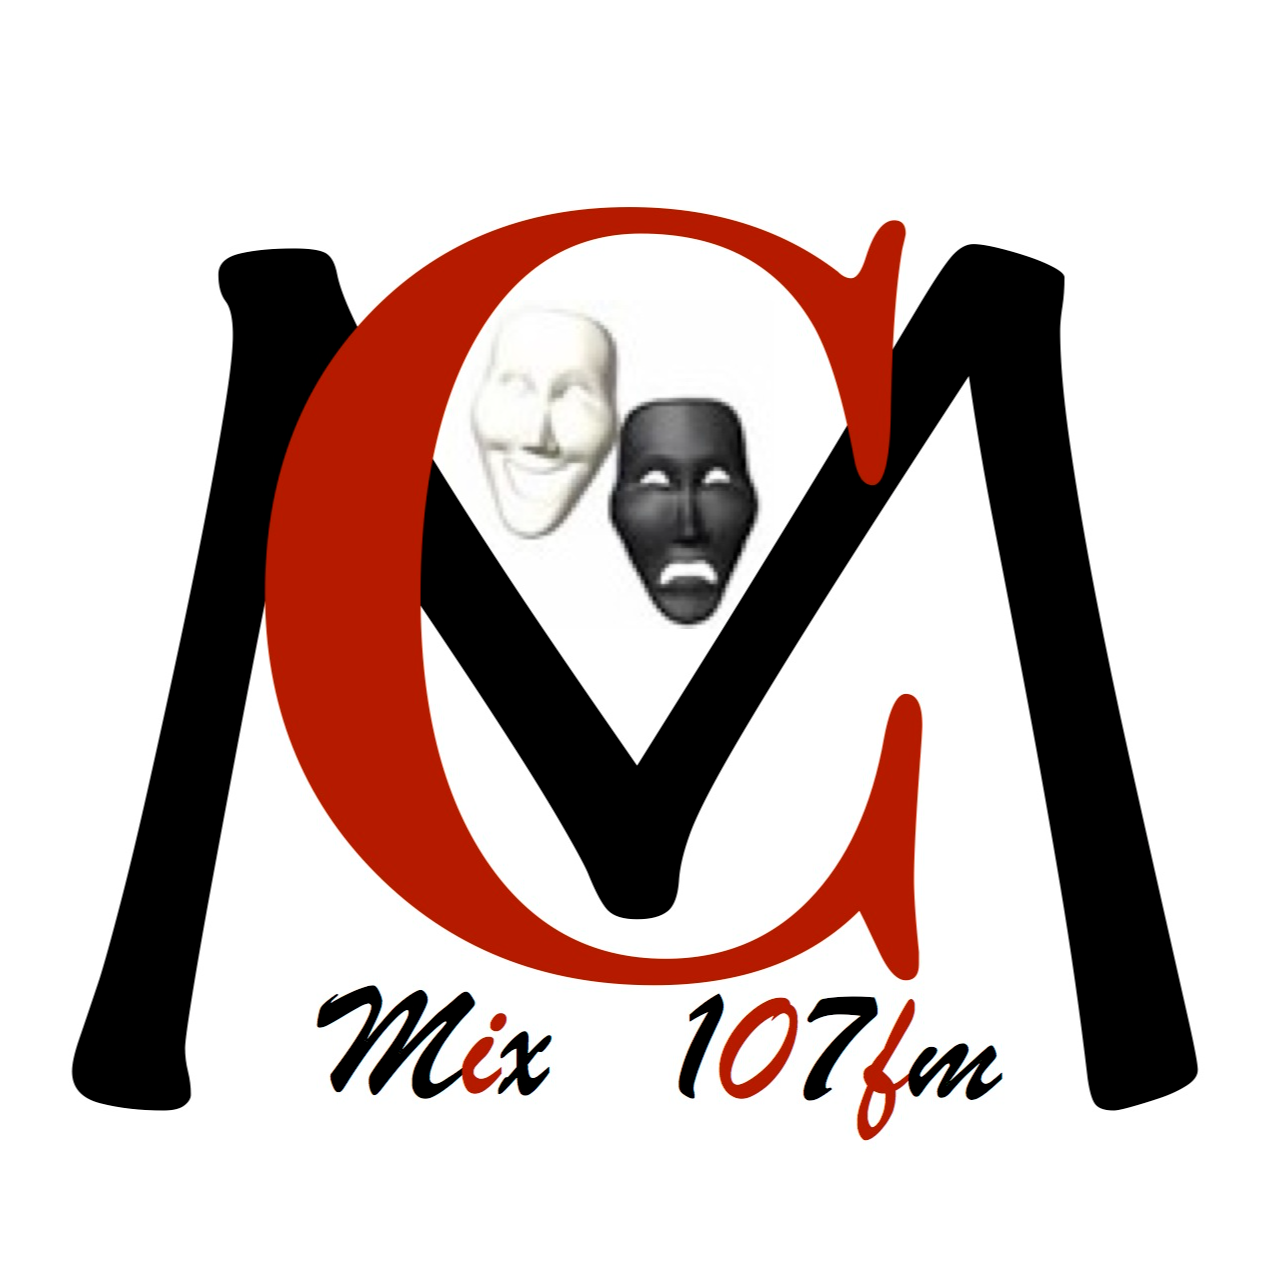 CM Mix 107 fm